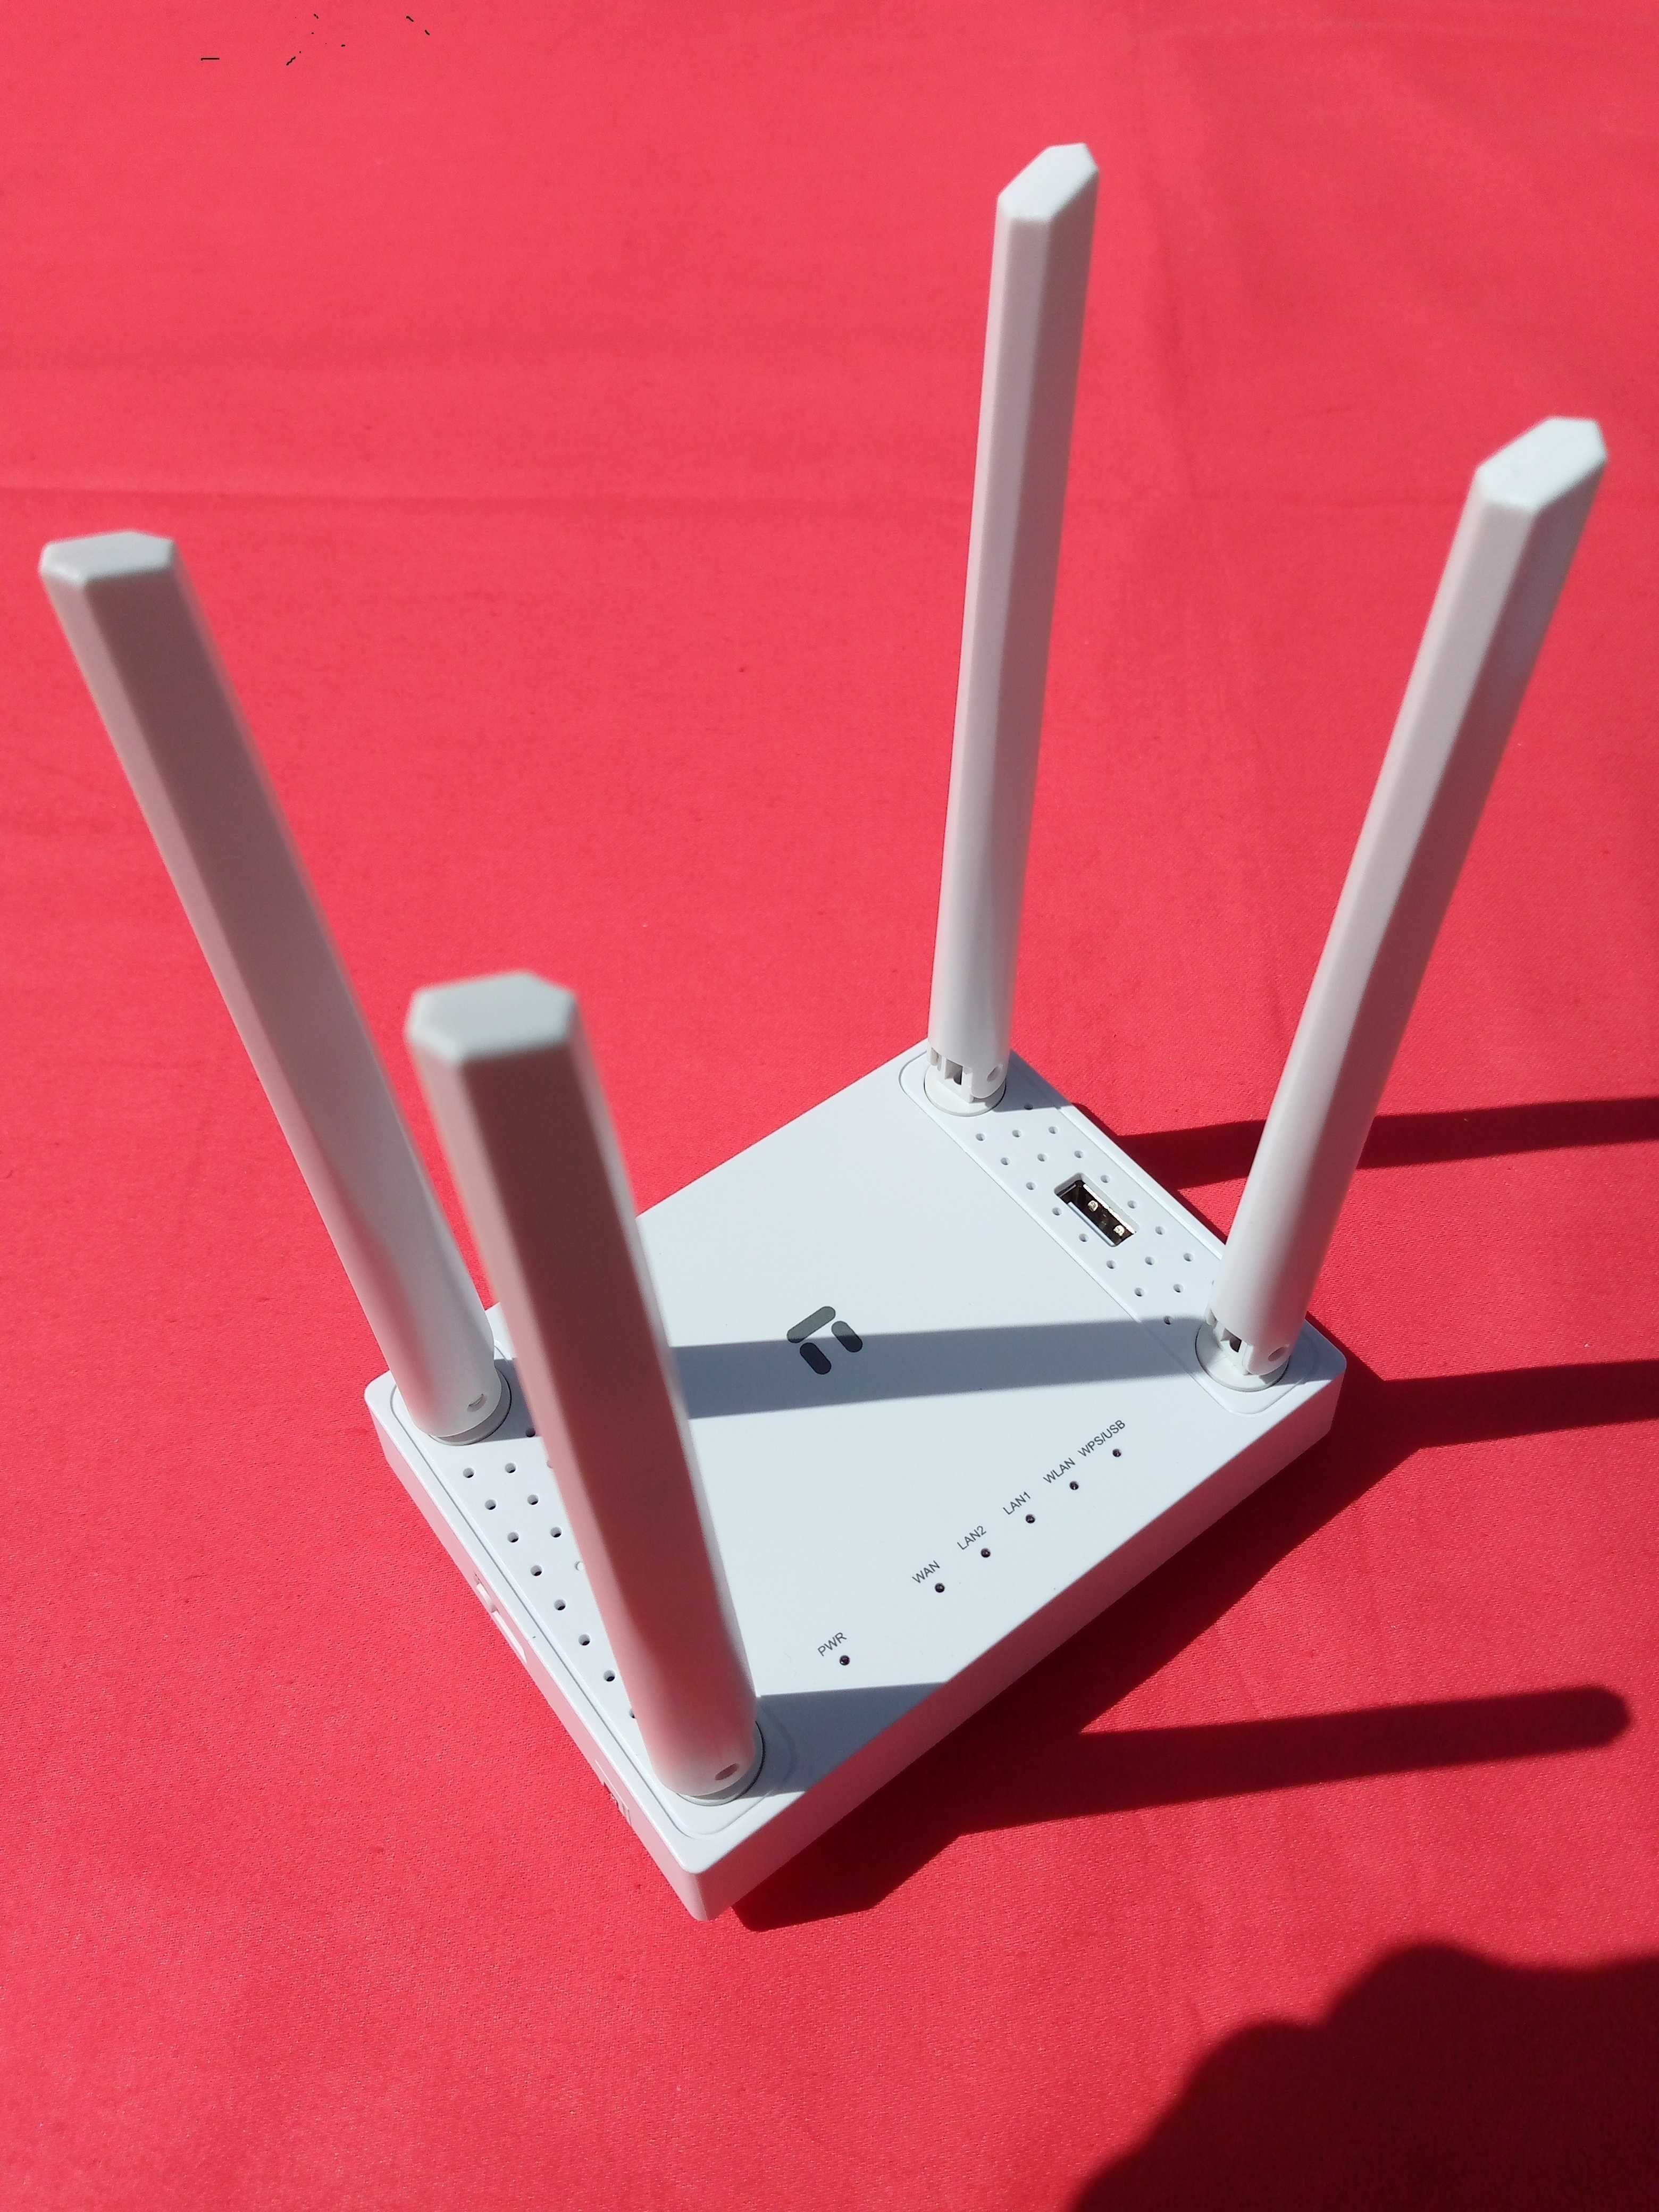 ‼️ Теле2 Алтел билайн izi актив WiFi роутер 4G+ до 150 мб.сек